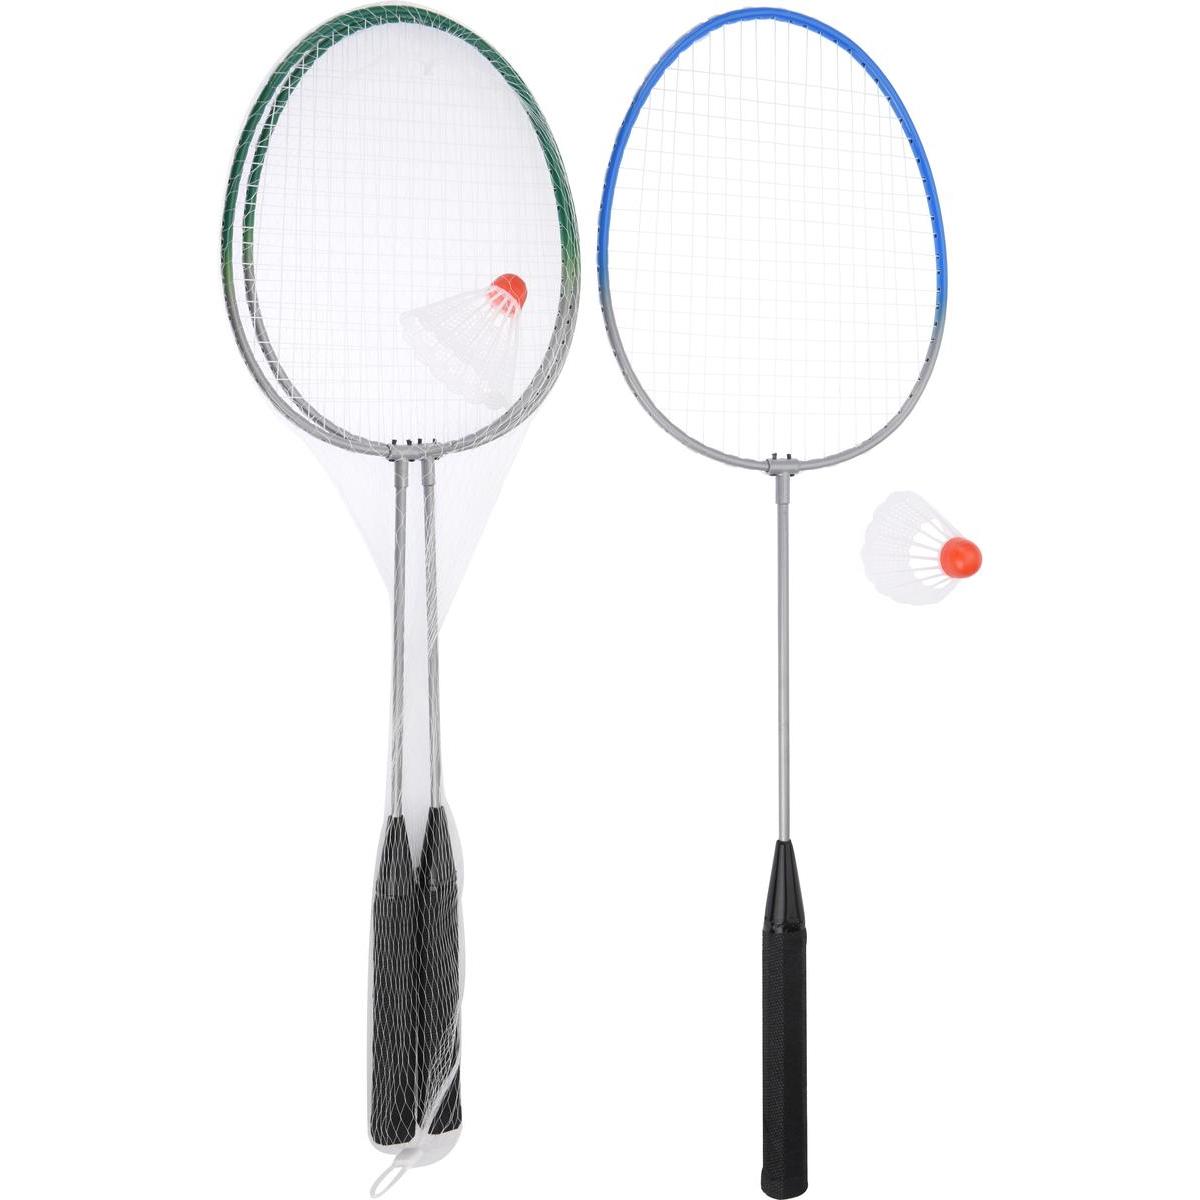 Set de Badminton - 2 raquettes + volant - Multicolore